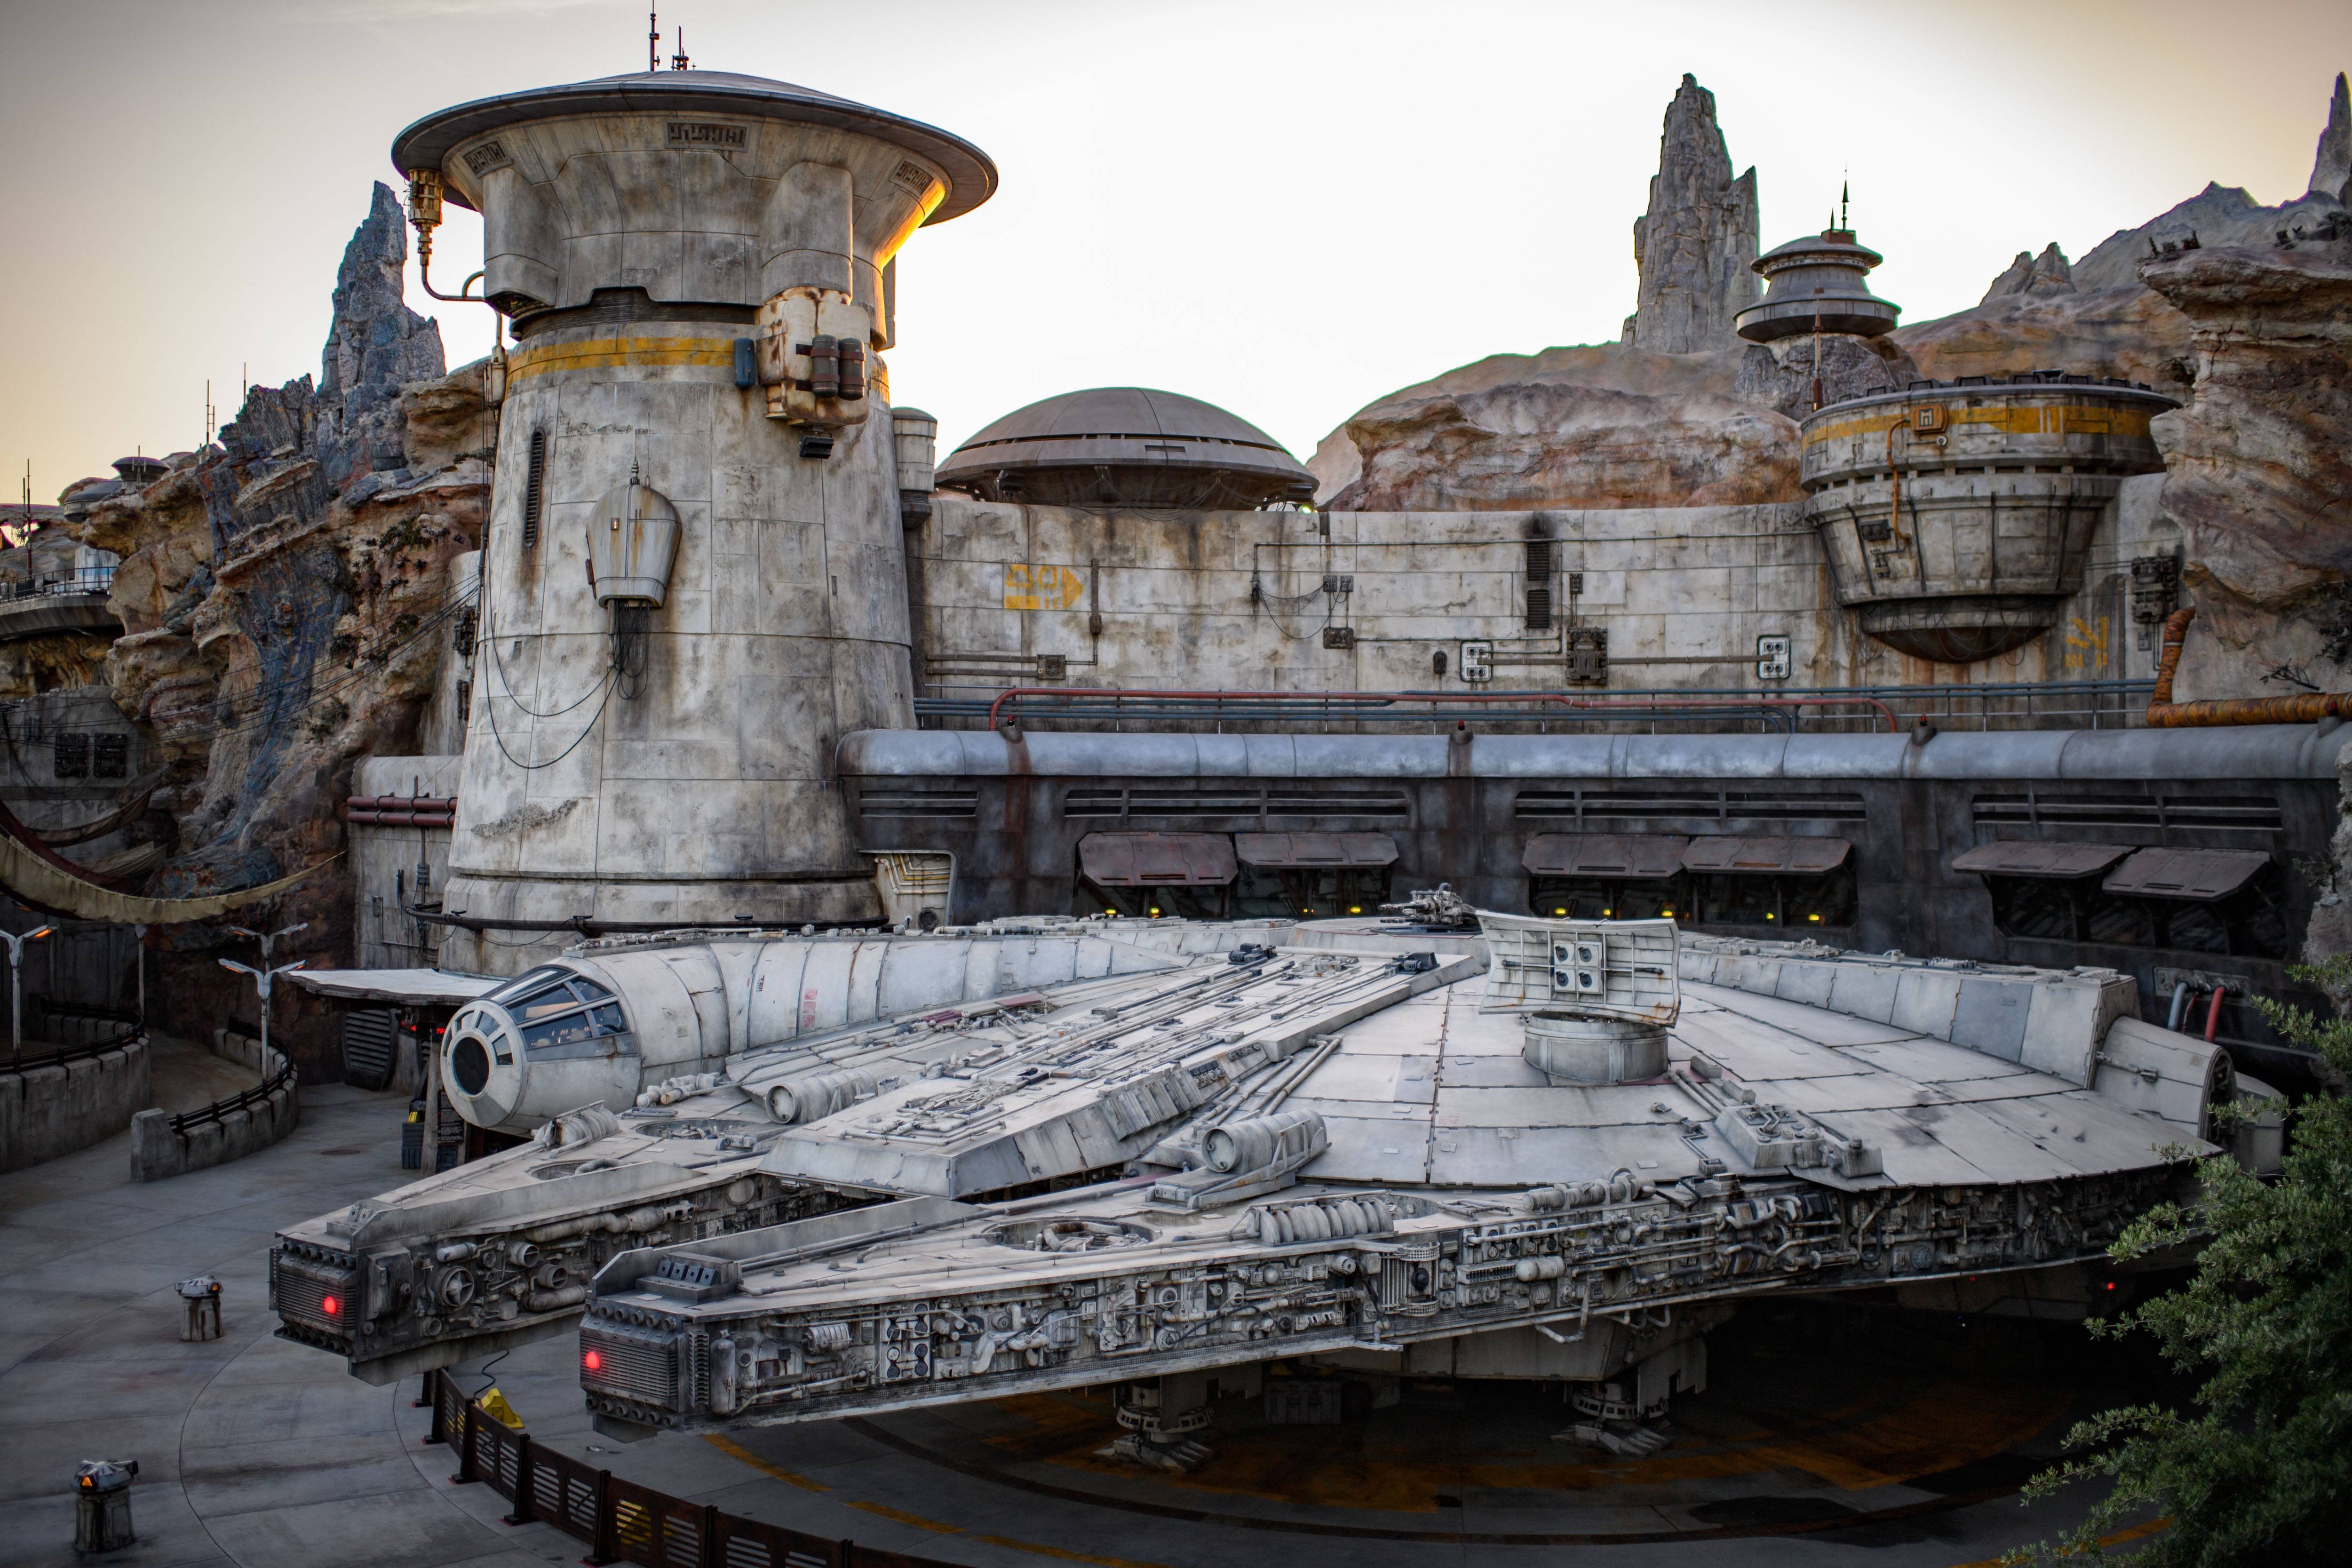 VIDEO - Sunrise drone flight over Star Wars Galaxy's Edge at Disney's Hollywood Studios